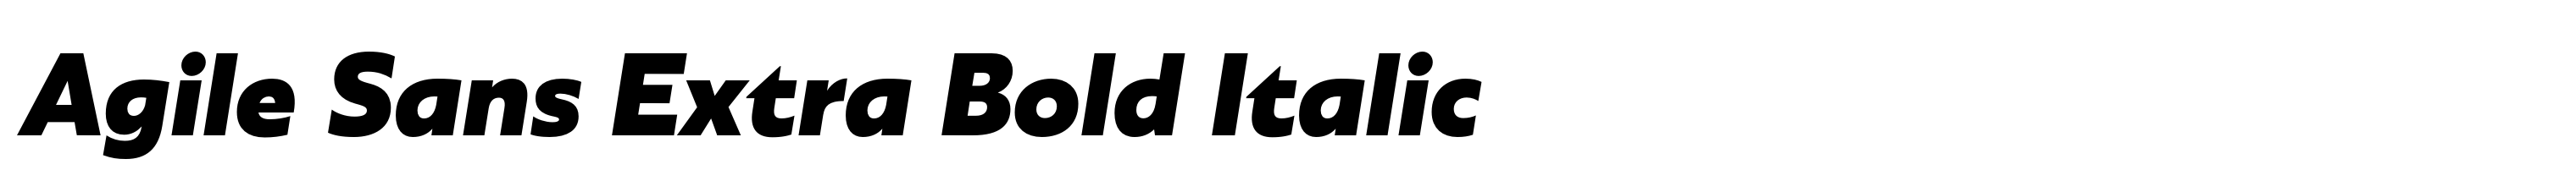 Agile Sans Extra Bold Italic